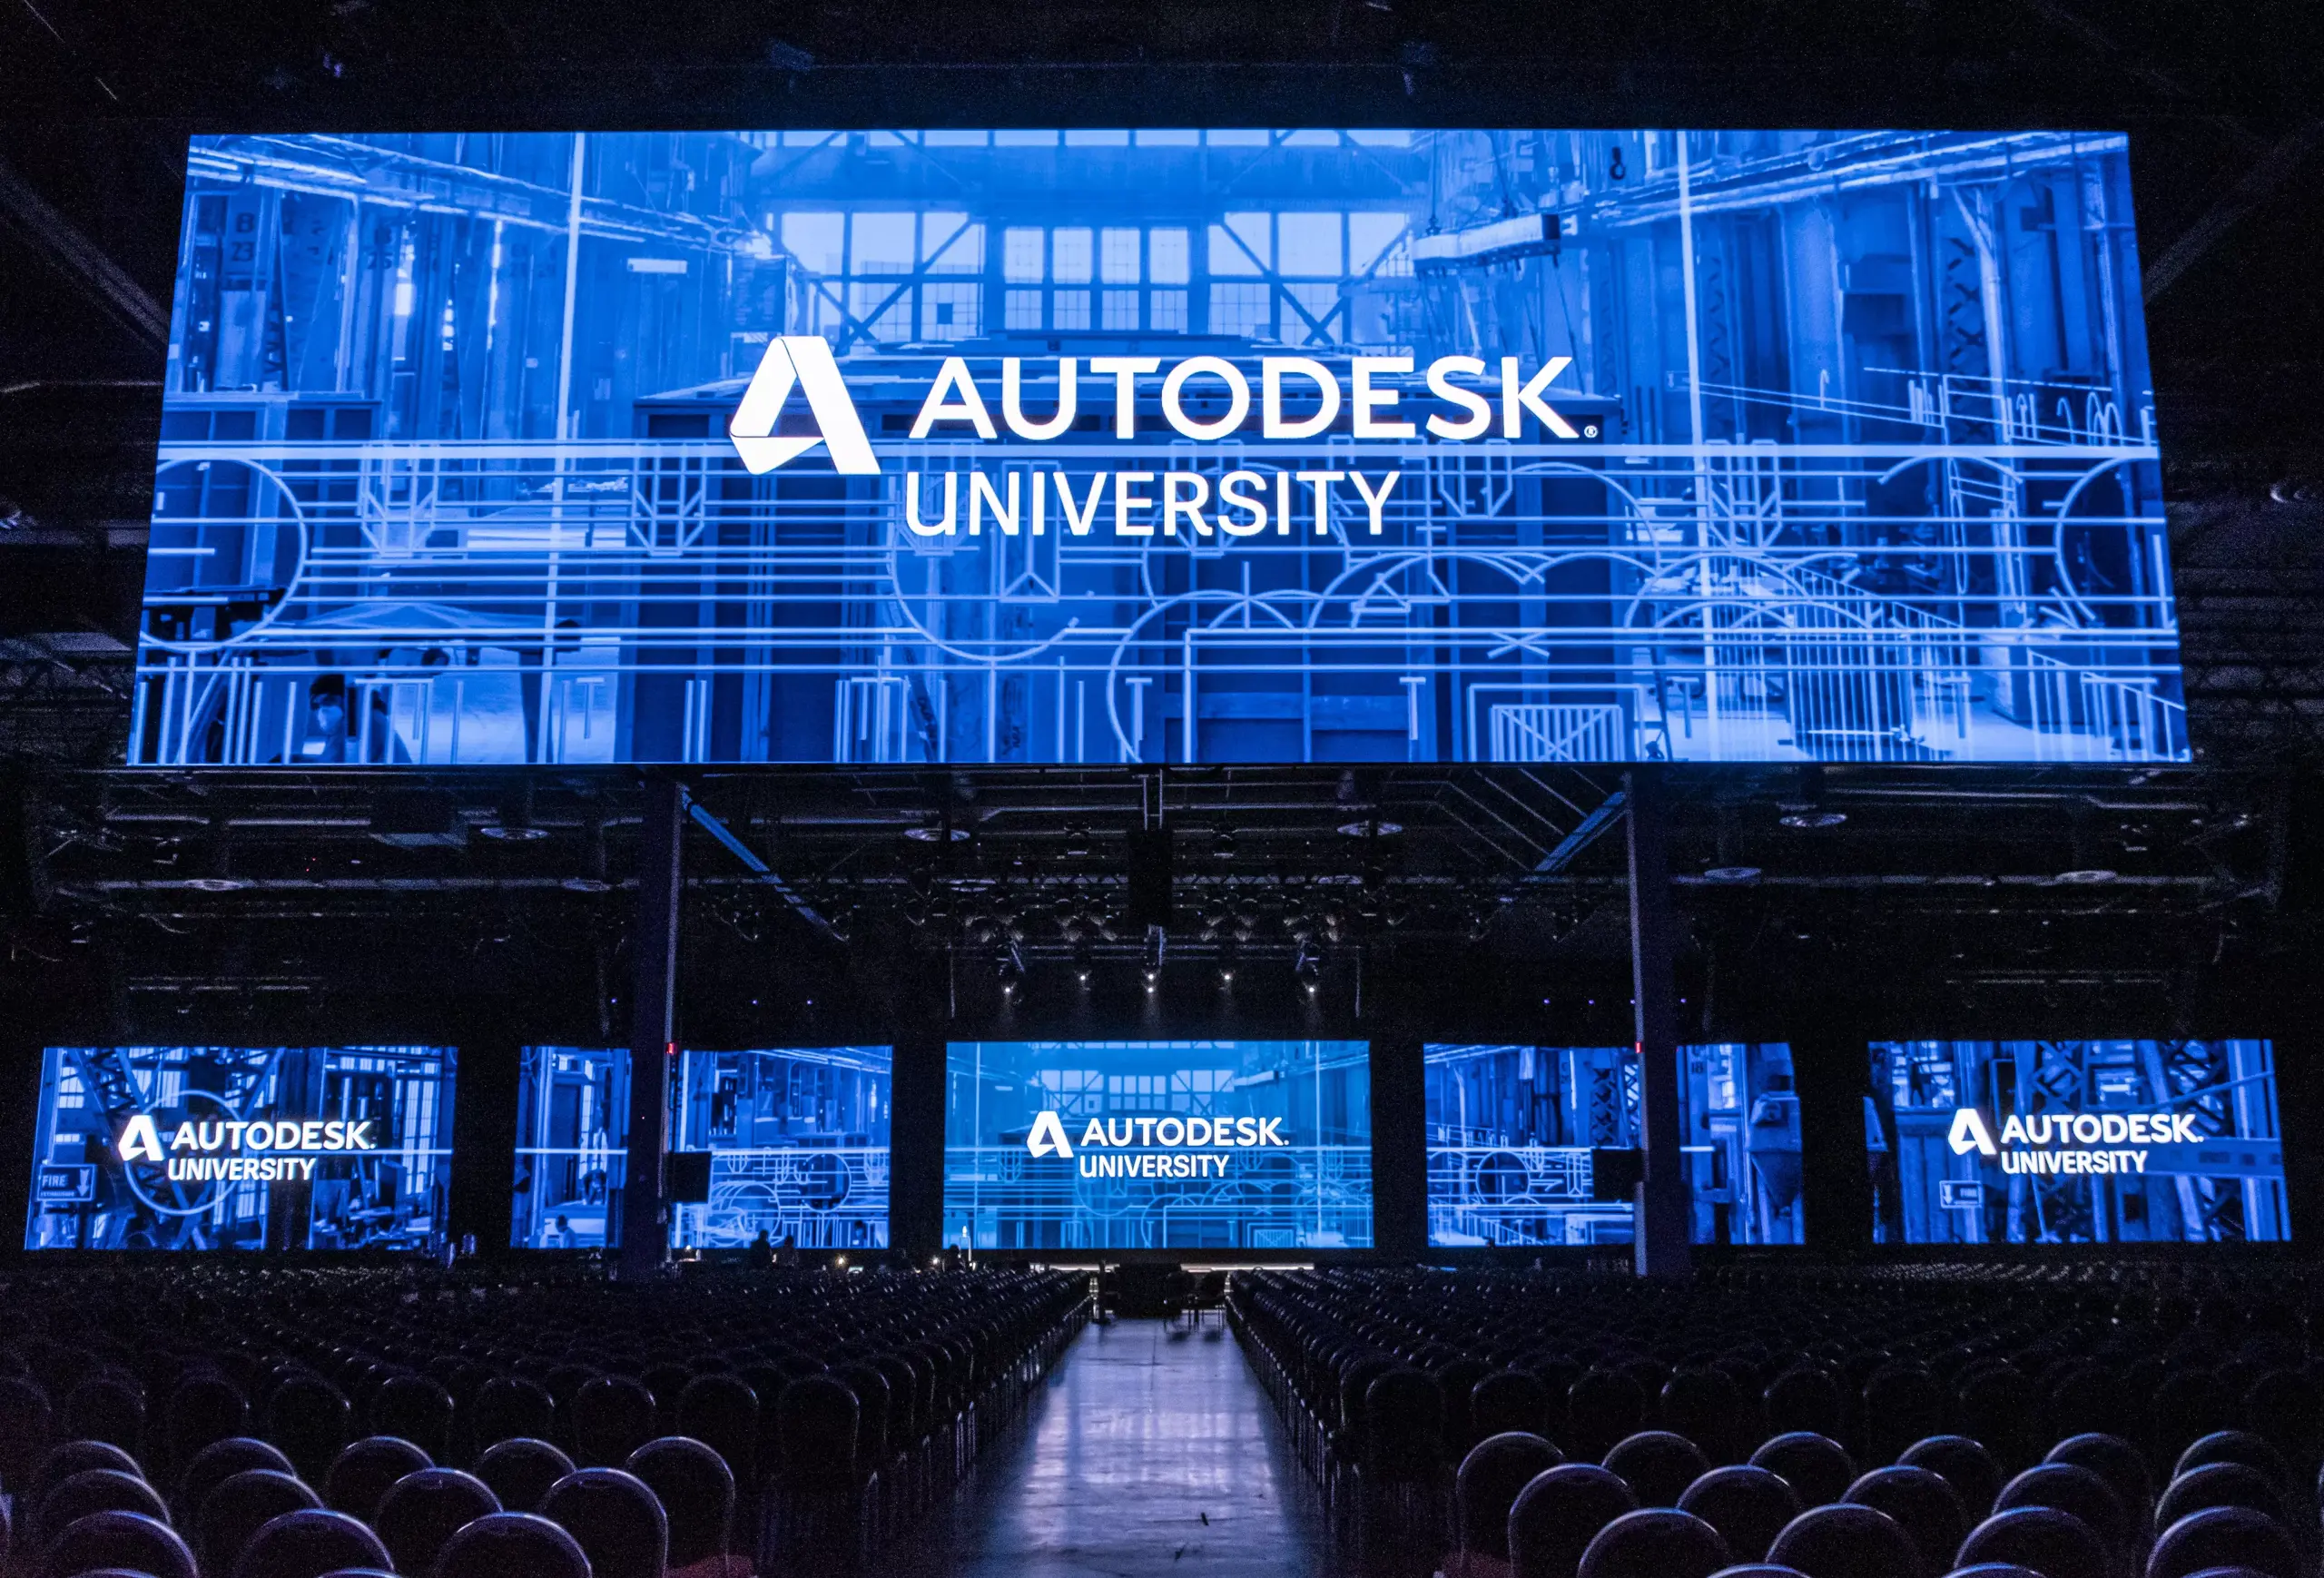 Autodesk header image